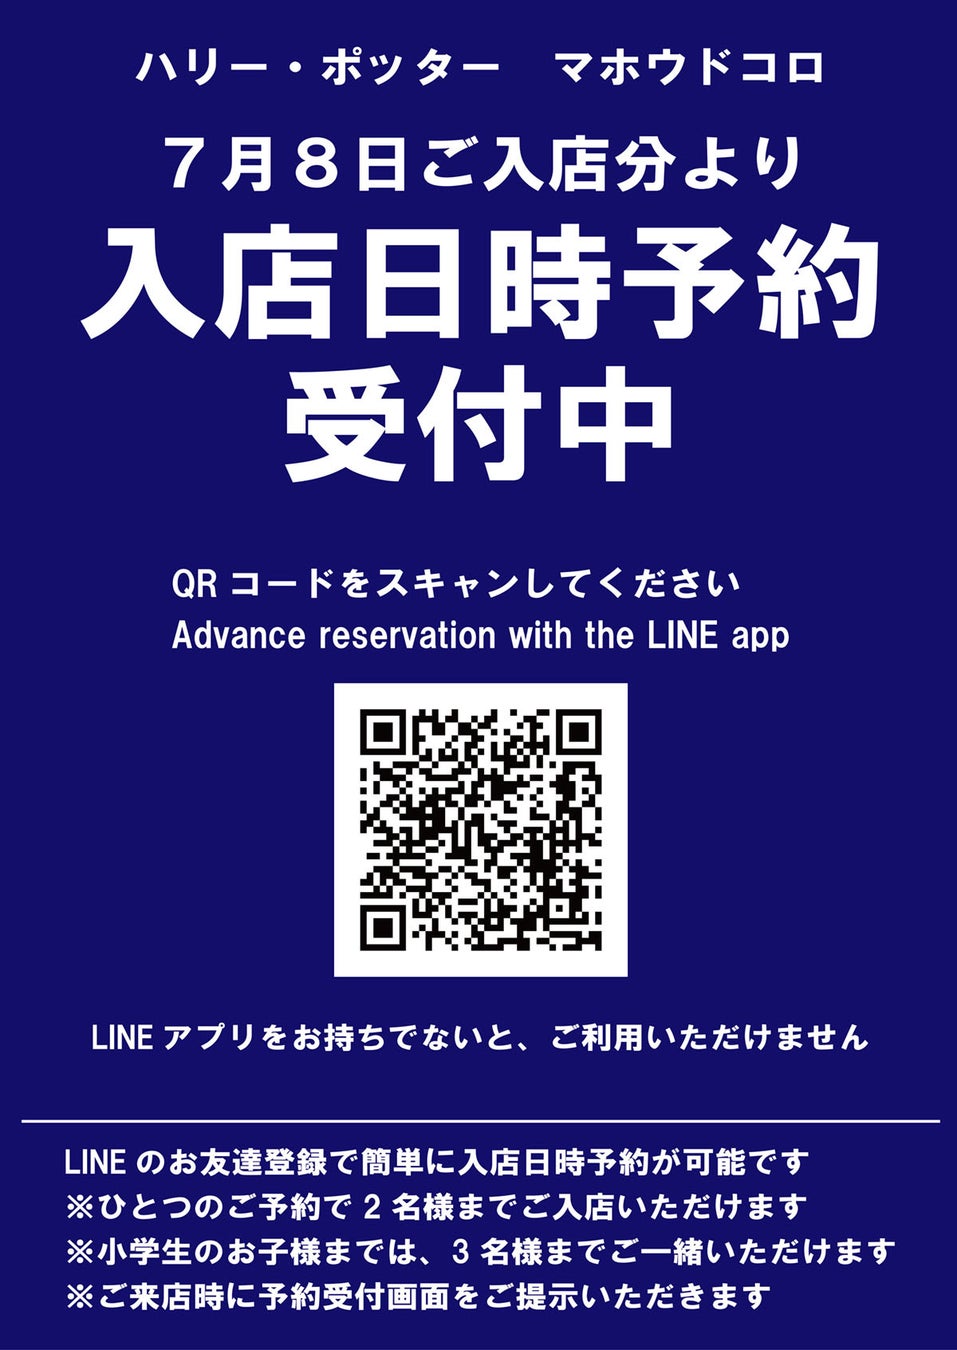 iKONがオンラインイベントアプリ「WithLIVE Meet&Greet」で JAPAN NEW ALBUM『FLASHBACK [+ i DECIDE]』発売記念オンラインイベントを開催